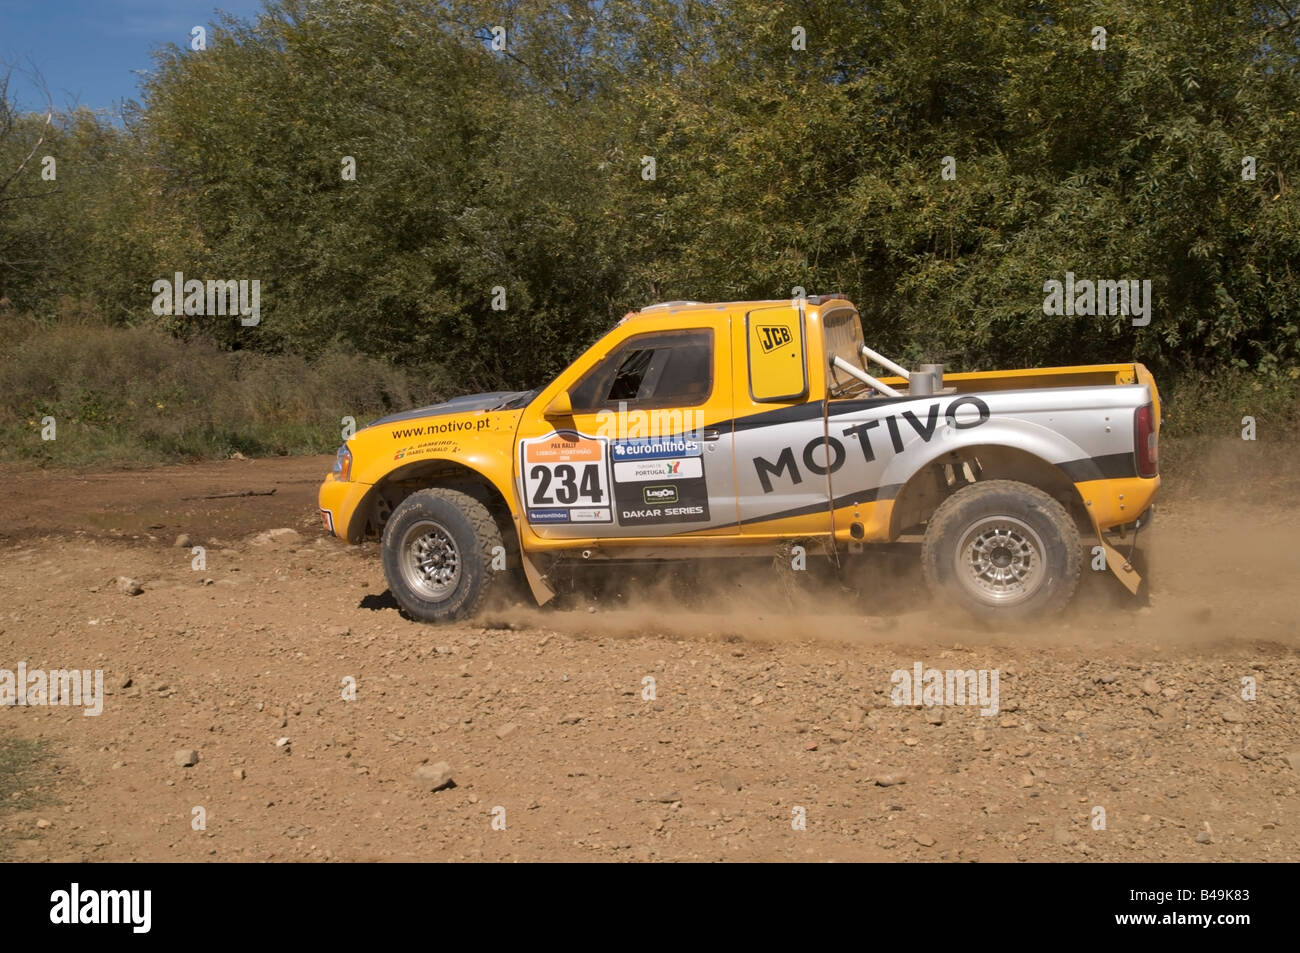 Pax-Rallye-Lisboa Portimão - Dakar Series - Auto 234 - trancigen-Team - Alexandra Gameiro und Isabel Robalo Stockfoto